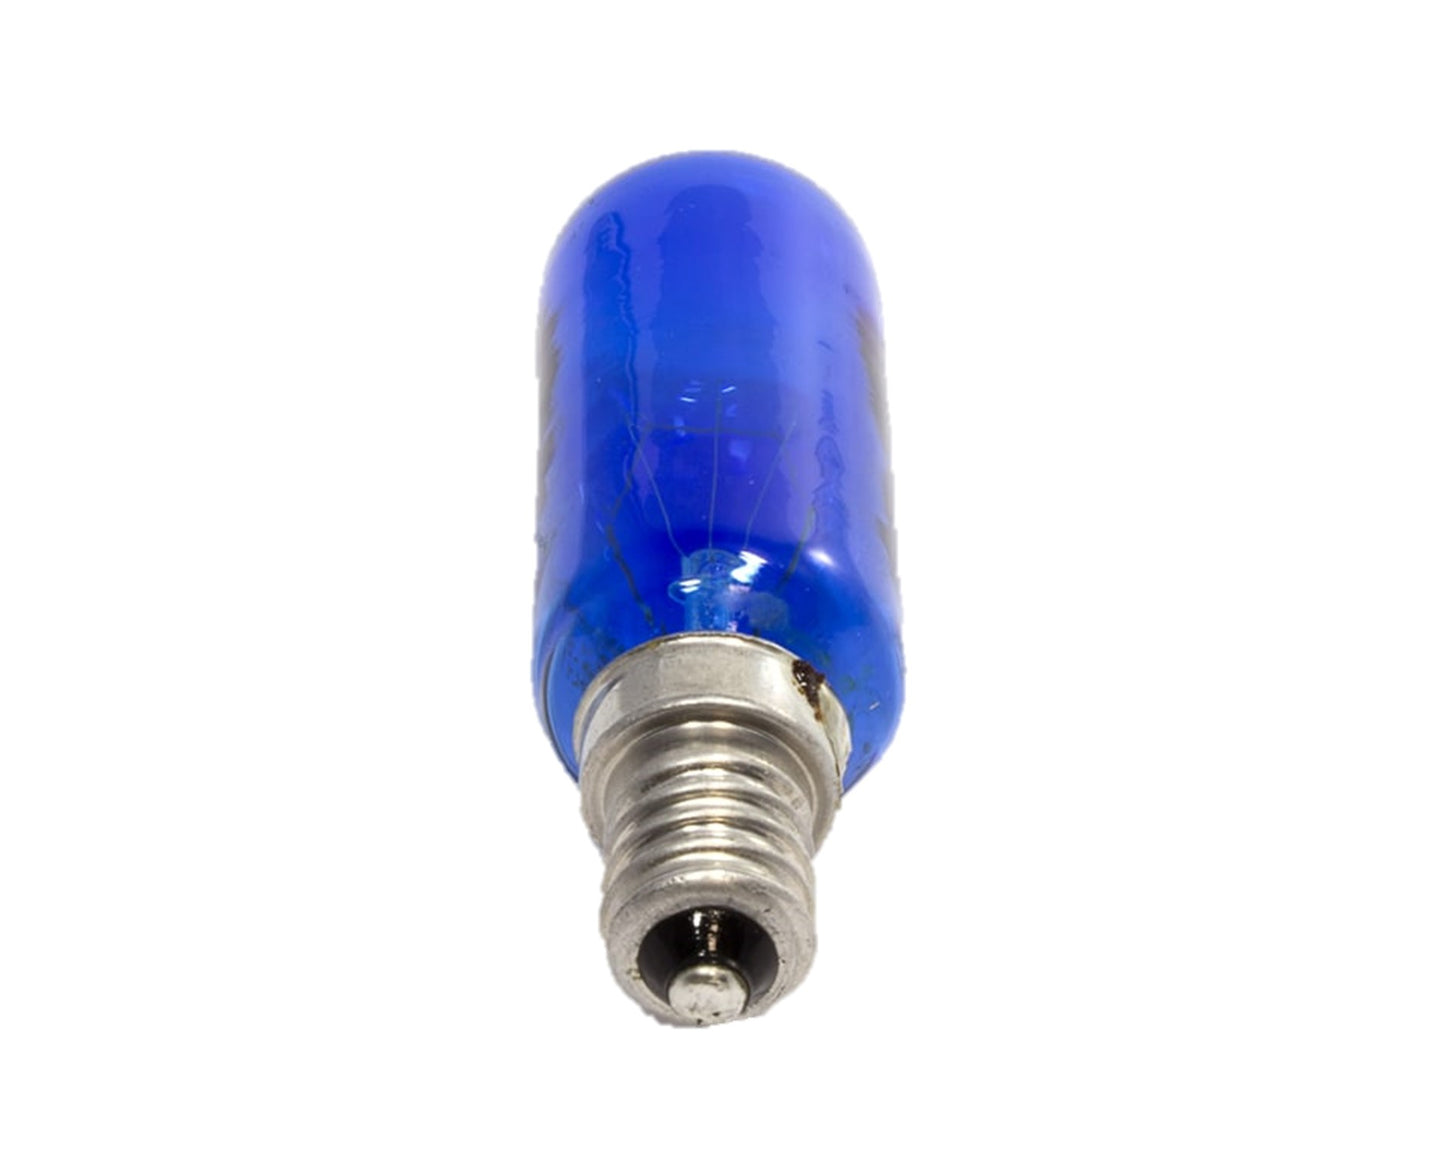 Refrigerator Fridge Lamp Bulb for Neff Fridge Freezer 25W E14 SES Blue 612235, 00612235